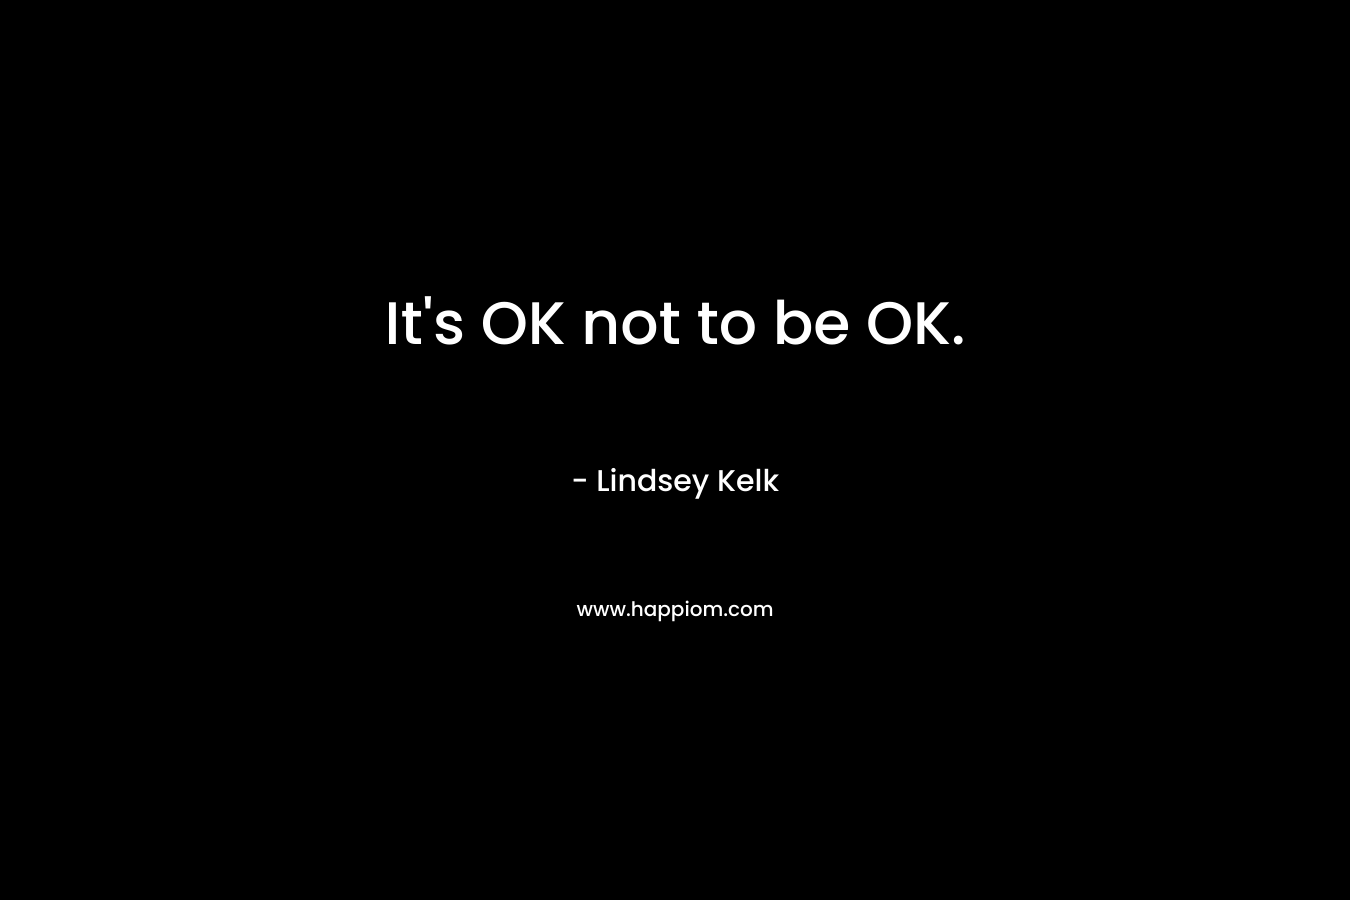 It's OK not to be OK.